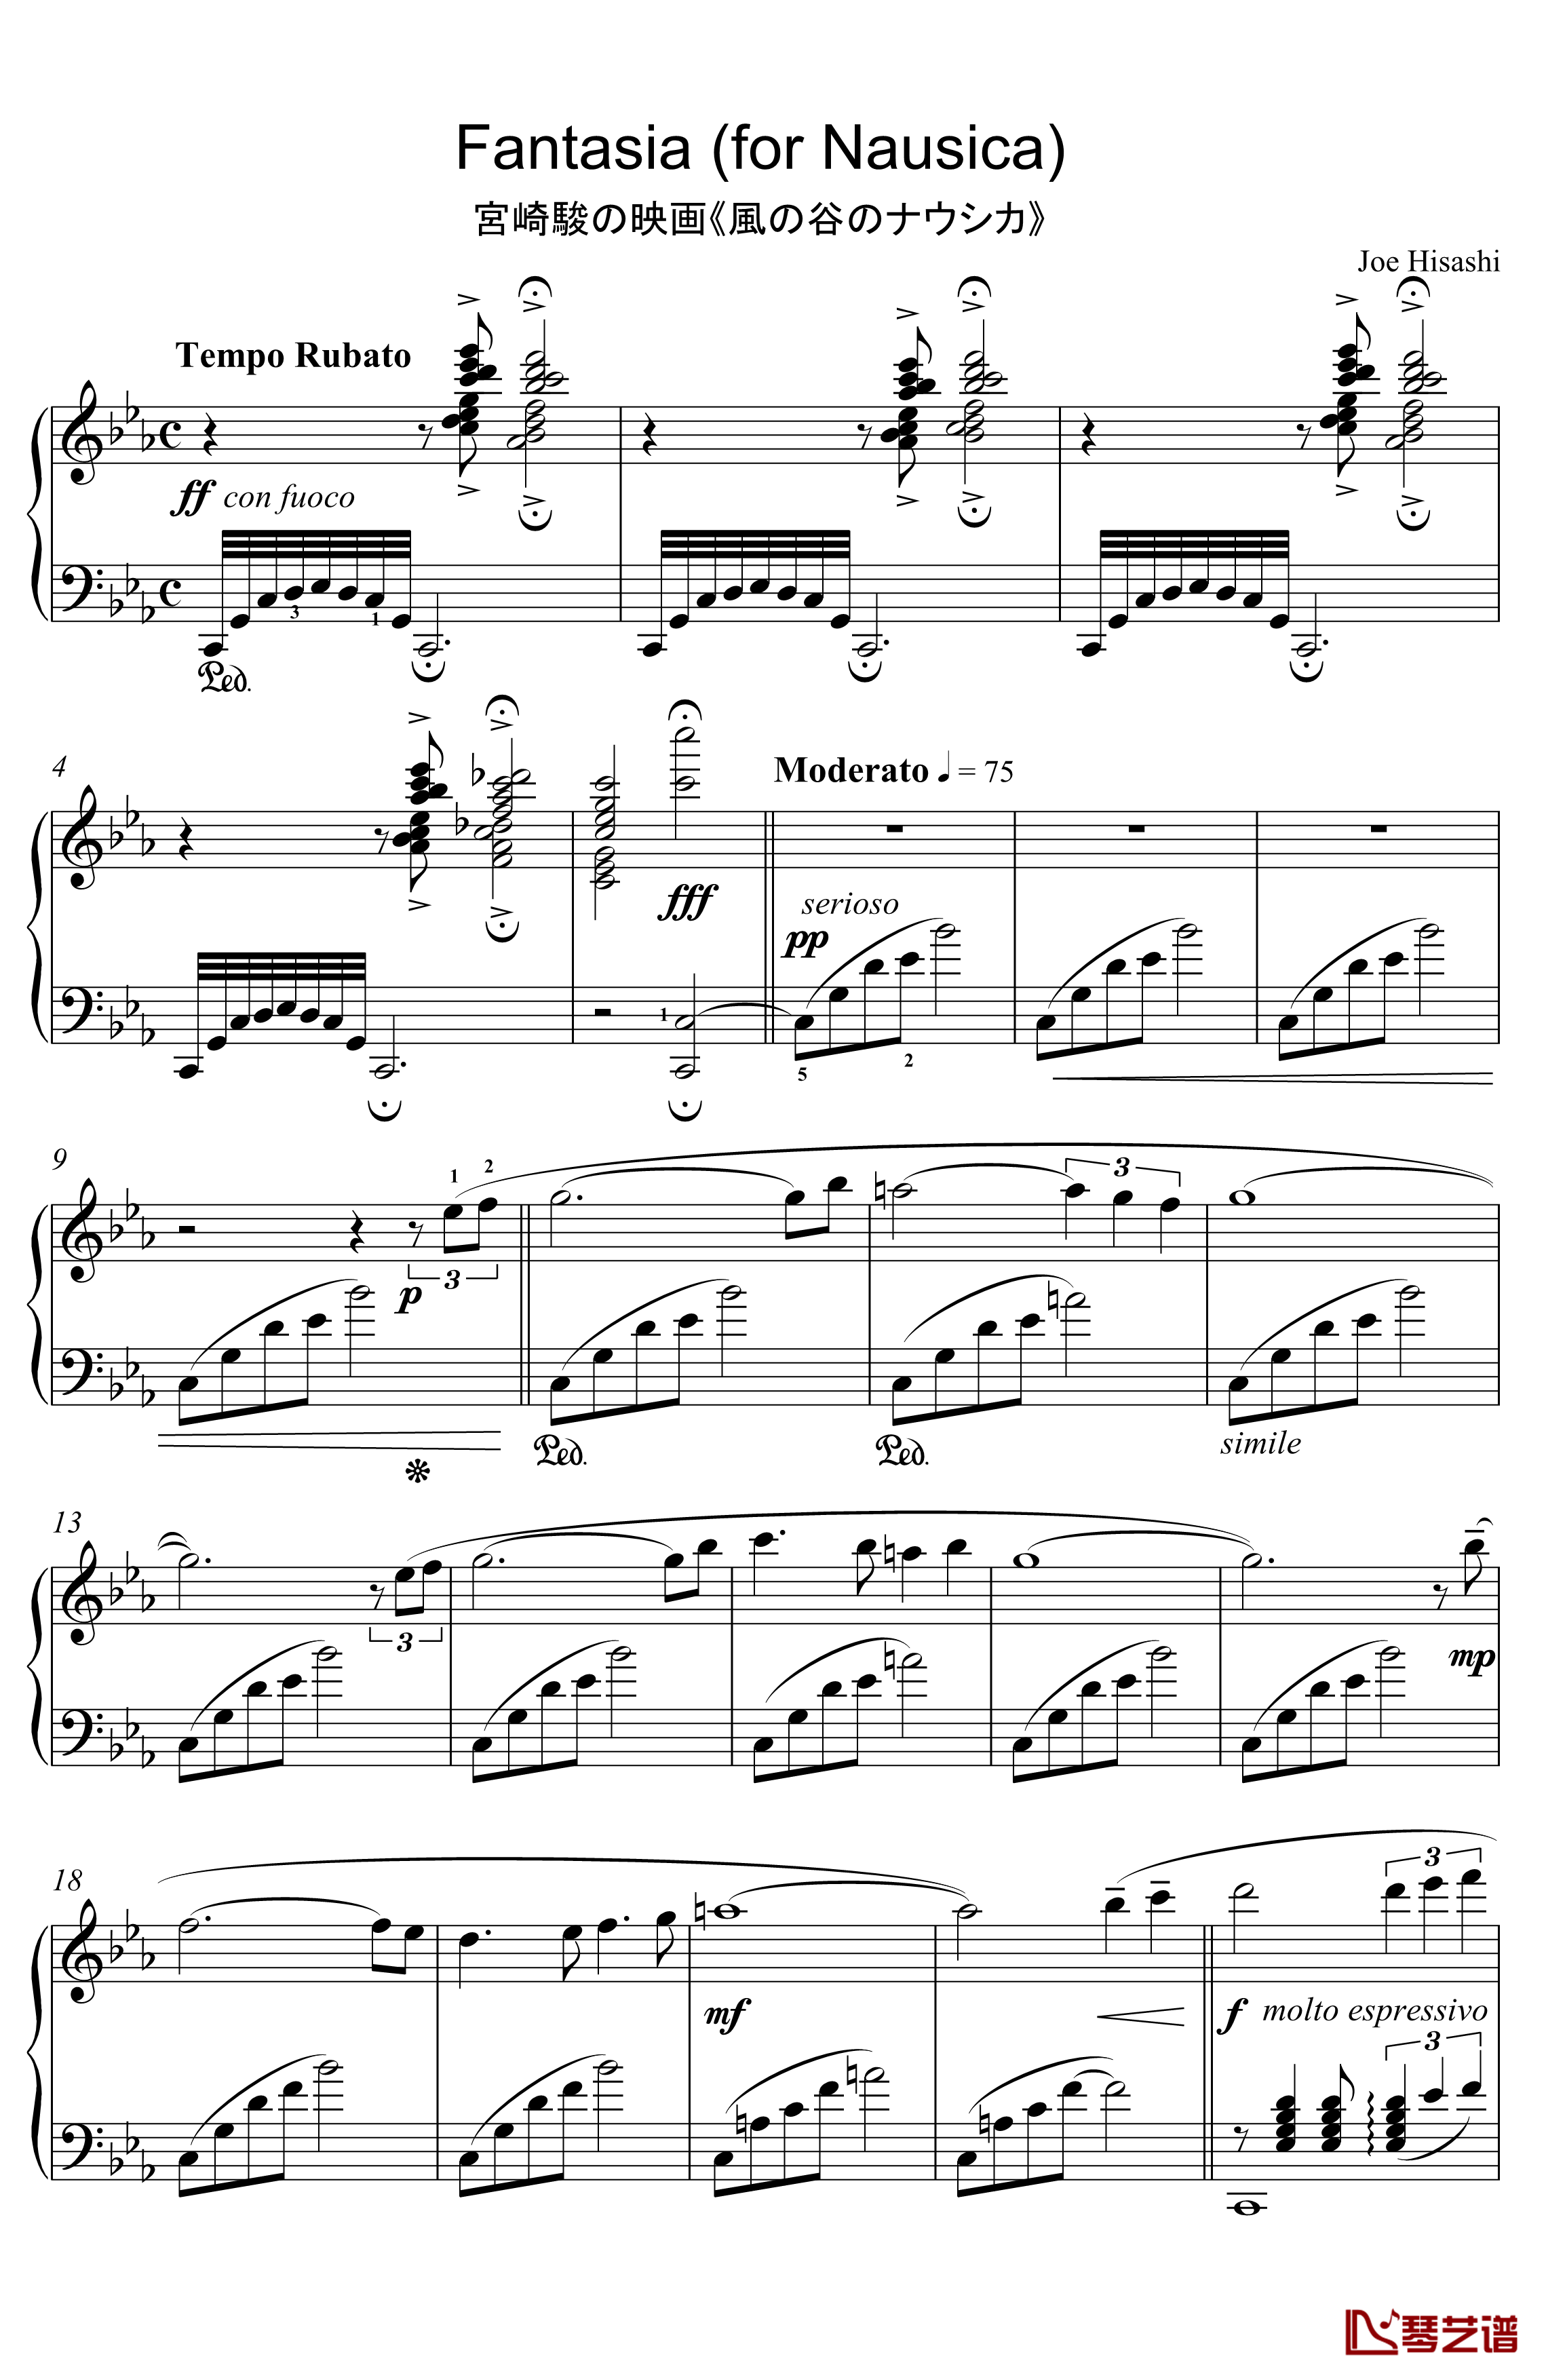 Fantasia 钢琴谱-for Nausica-久石让1